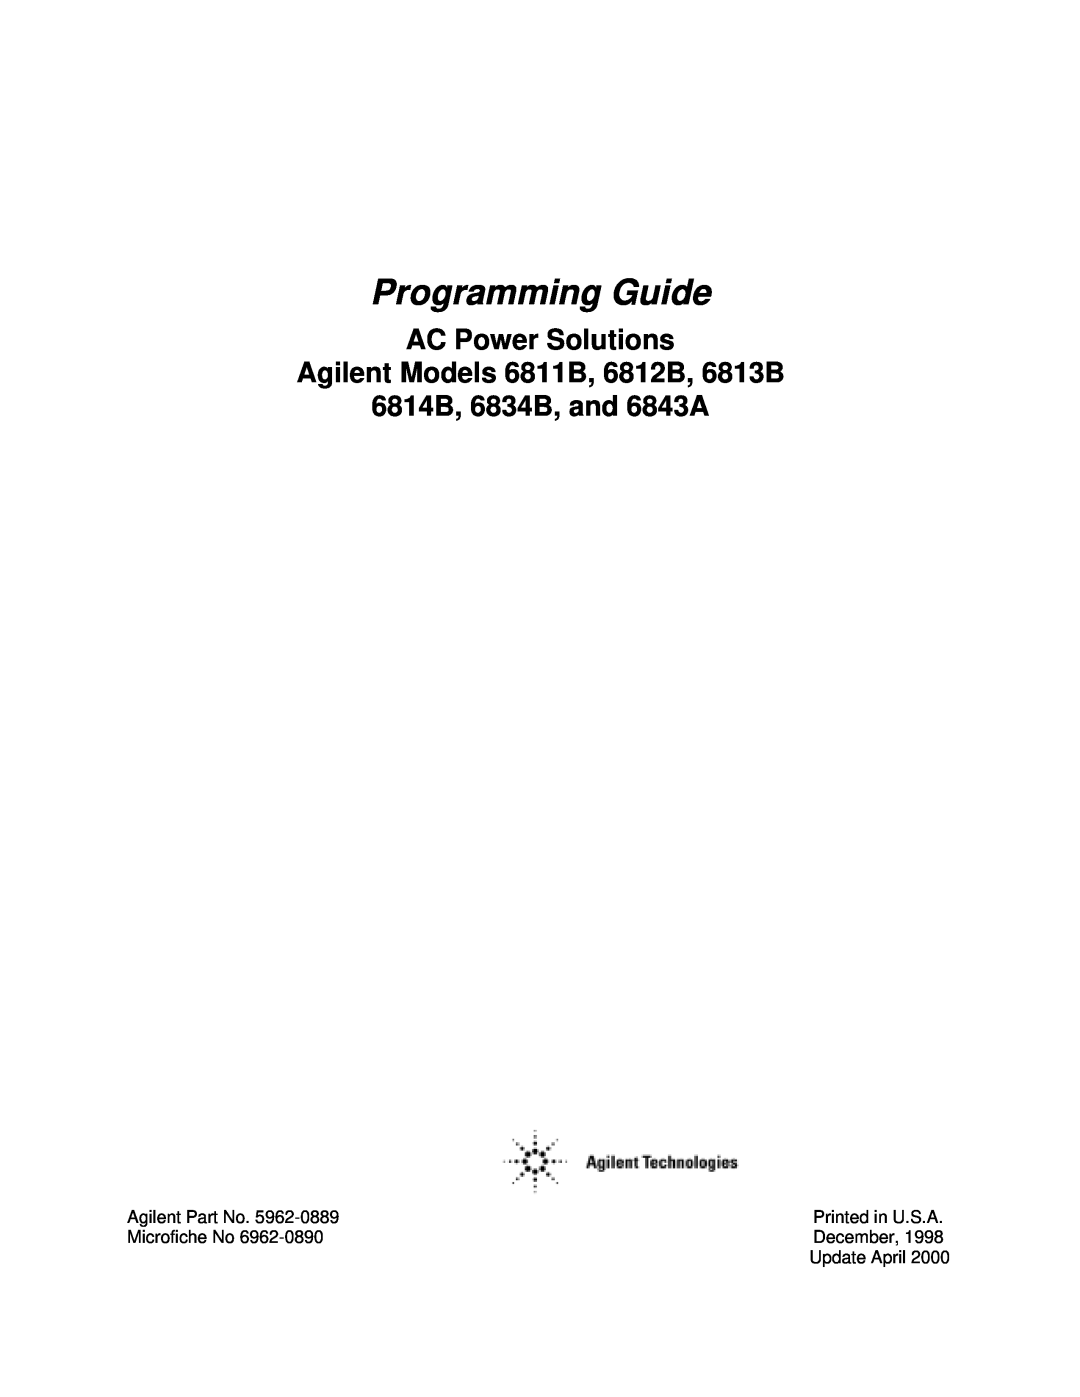 Agilent Technologies service manual to the Agilent Model 6813B, VA Output Capability Option, Addendum, Agilent P/N, May 